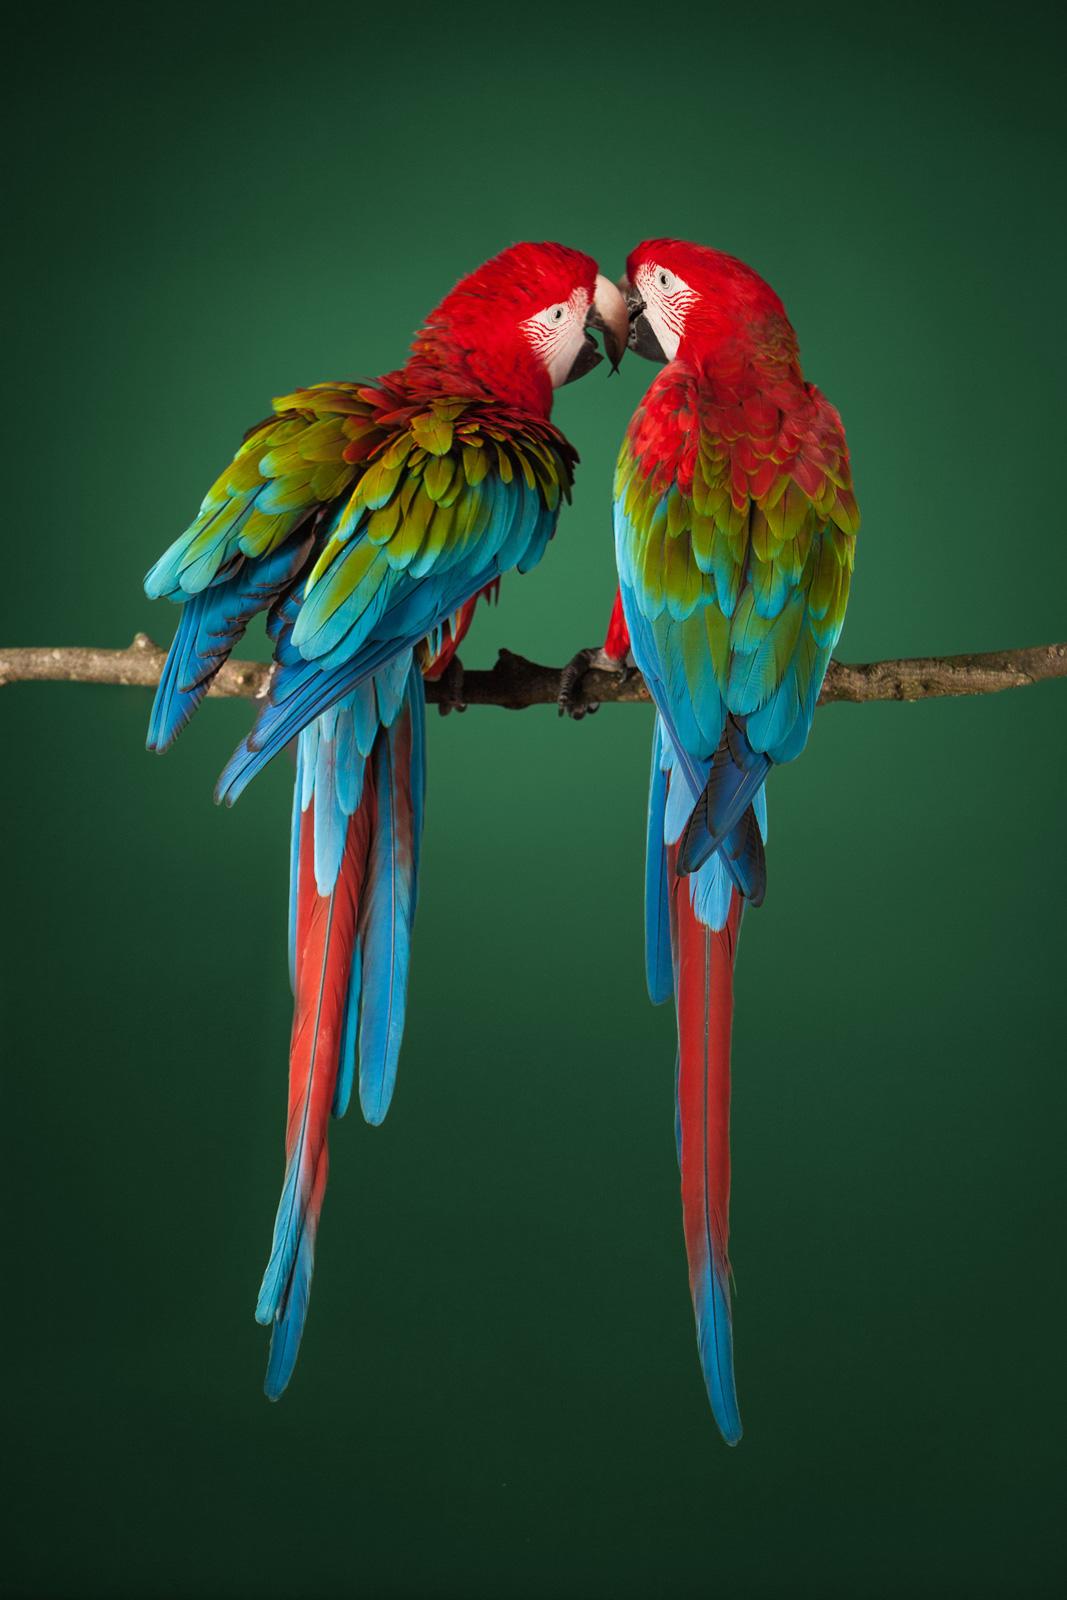 Tim Platt Still-Life Photograph - Macaw #2 - Signed limited edition nature fine art print, Contemporary photo, Bird